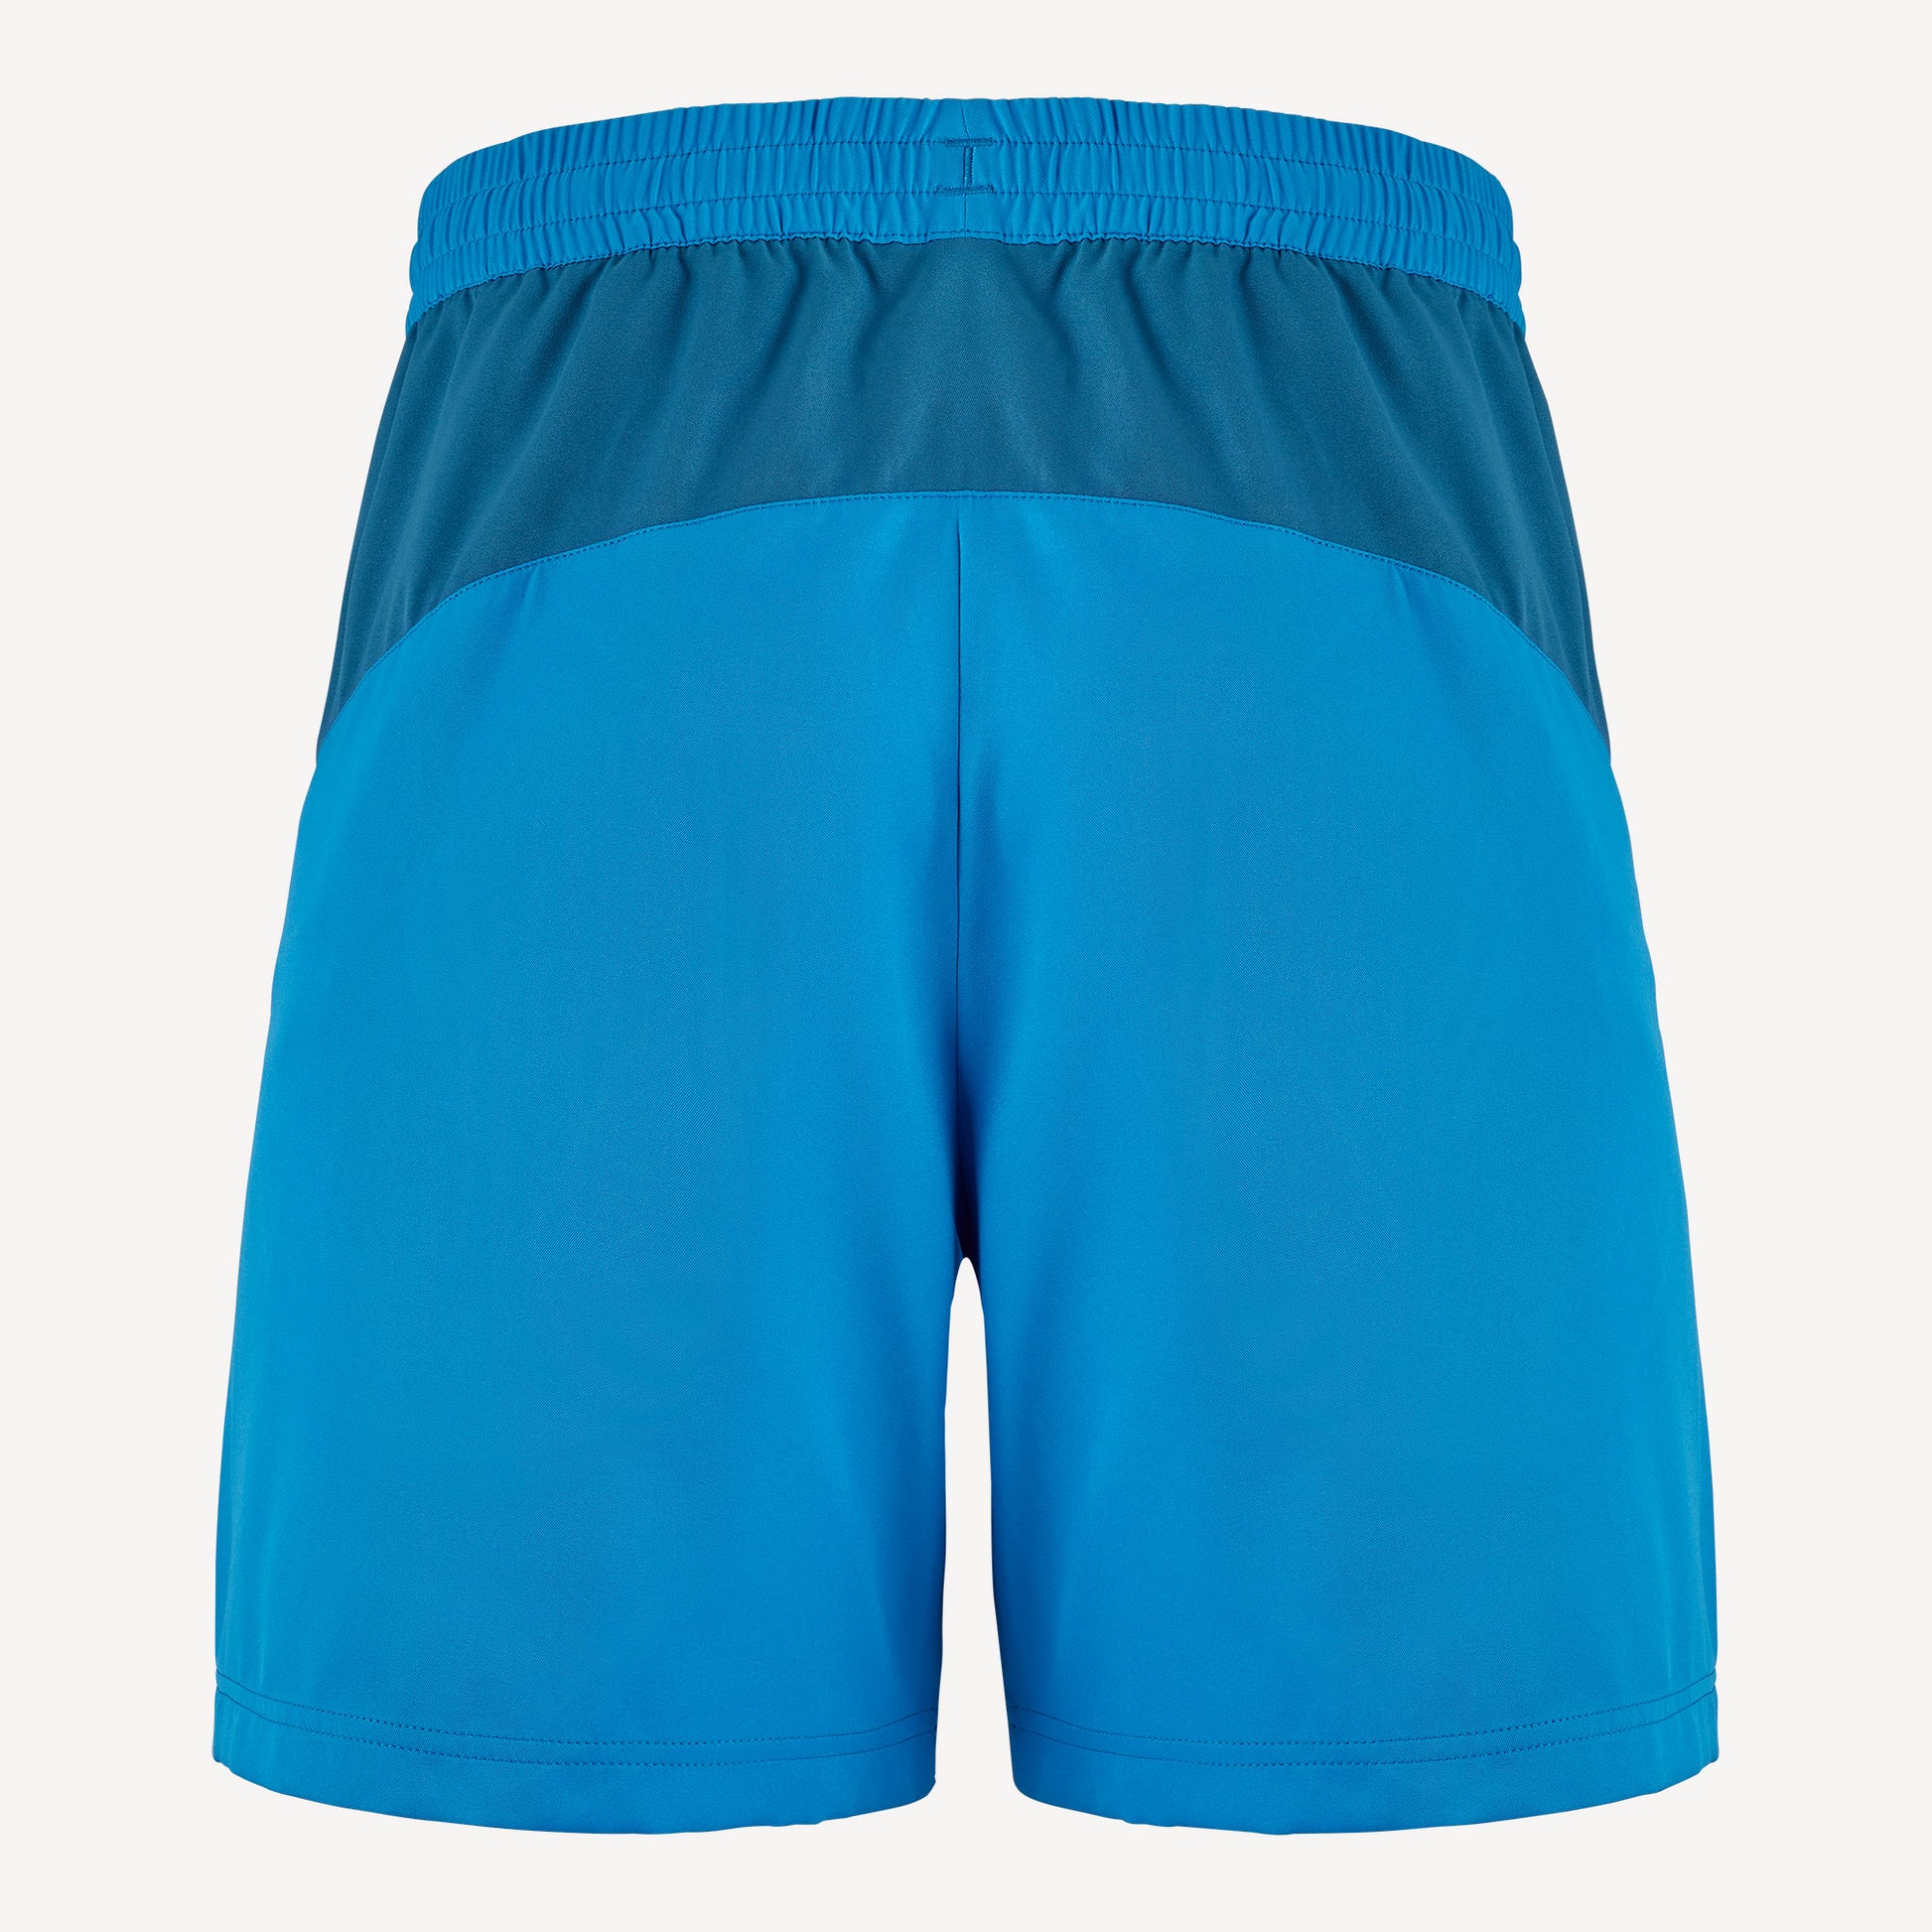 Babolat Play Club Boys' Tennis Shorts Blue (2)